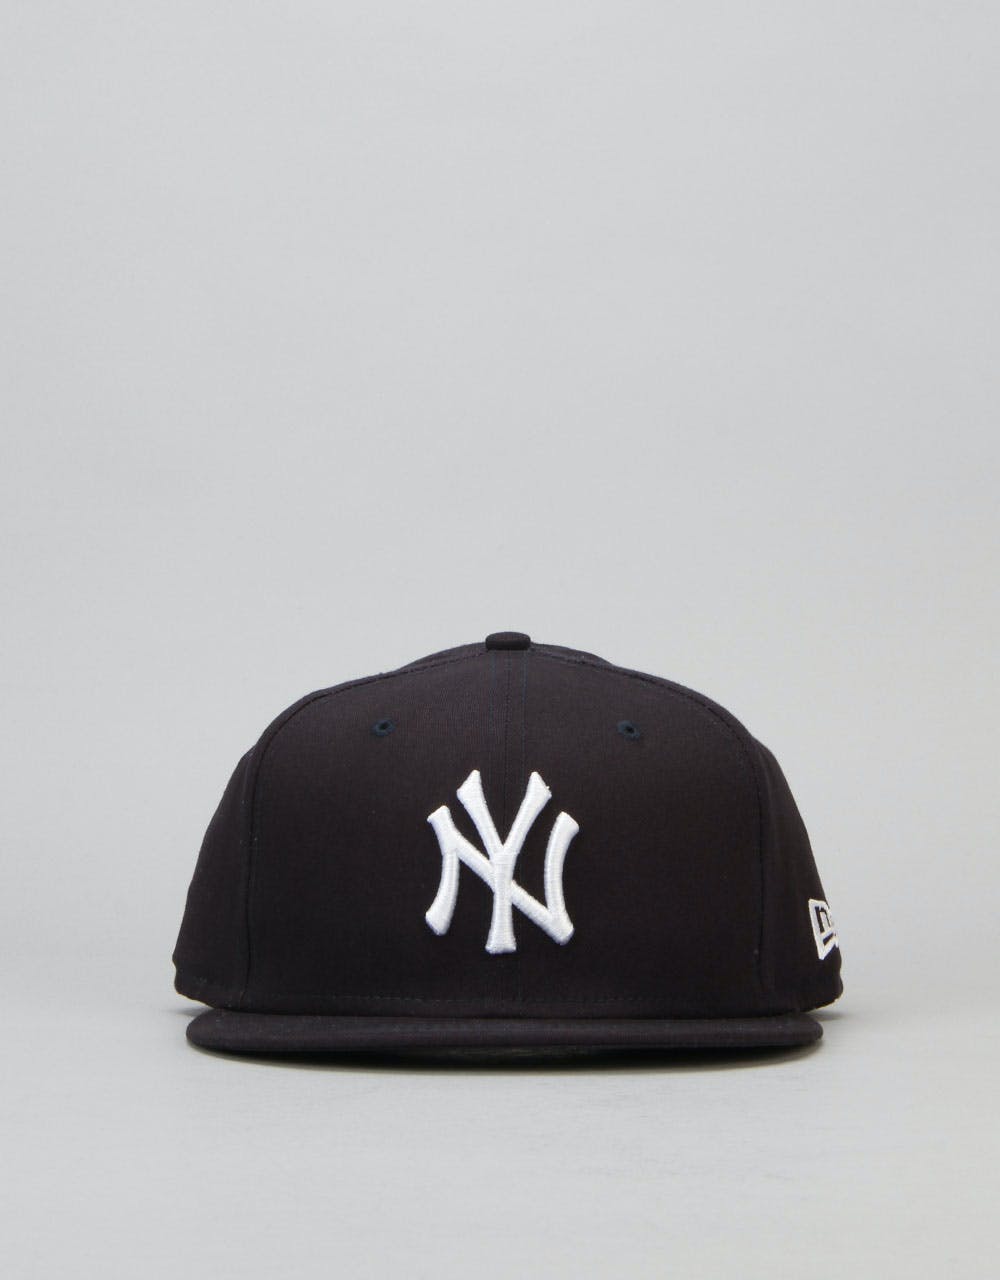 New Era 9Fifty MLB New York Yankees Snapback Cap - Navy/White